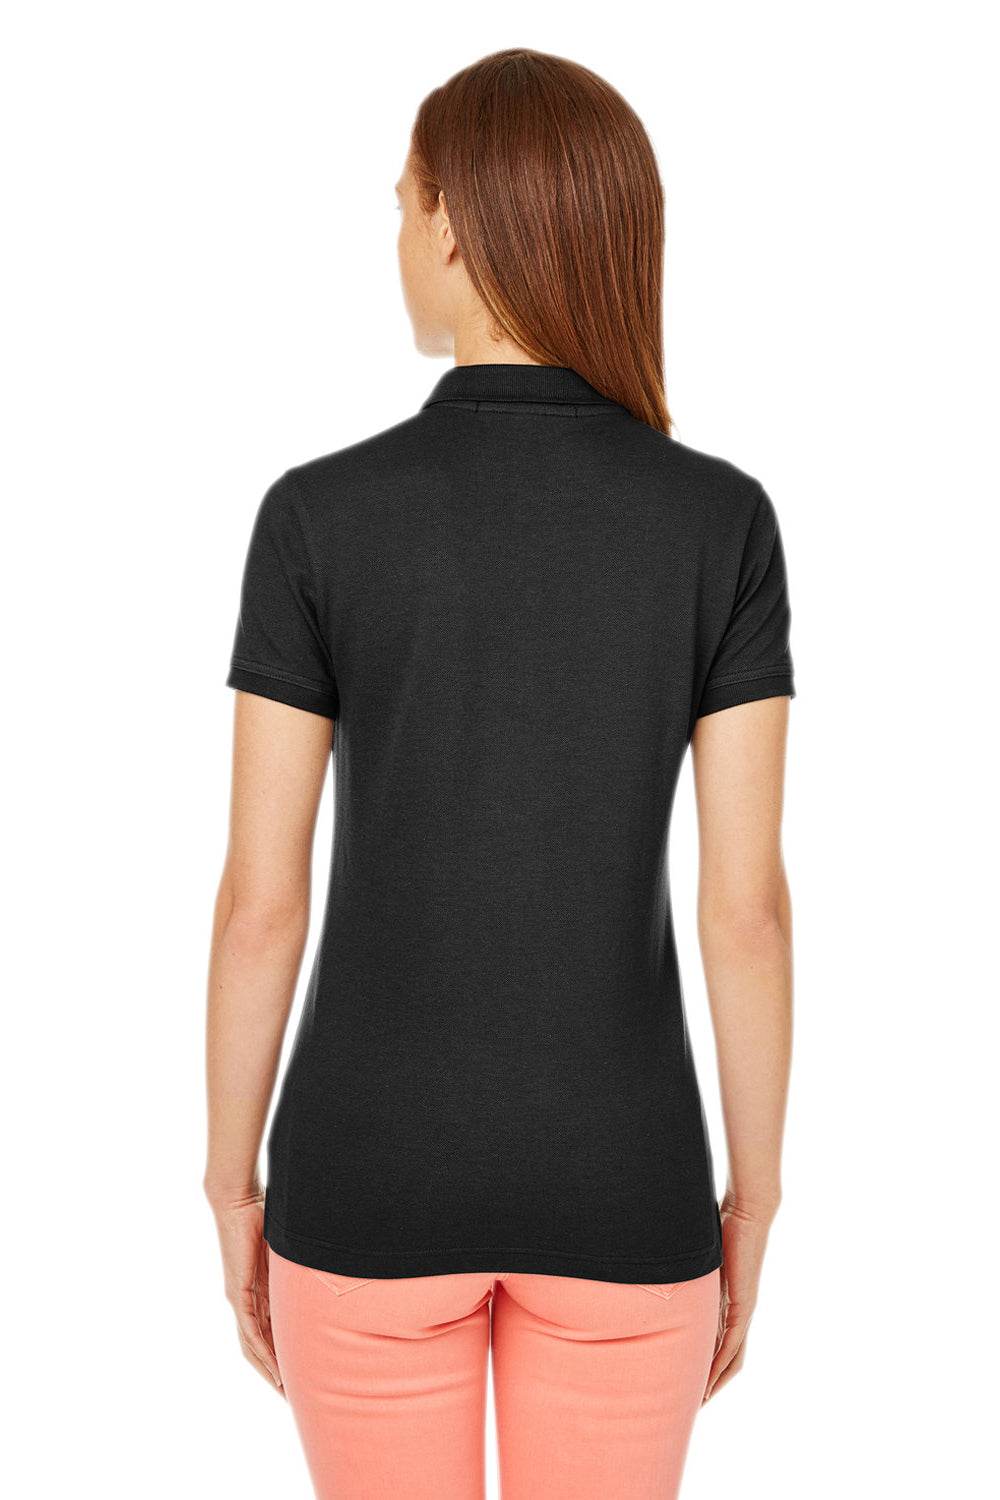 Devon & Jones DG100W Womens New Classics Performance Moisture Wicking Short Sleeve Polo Shirt Black Back